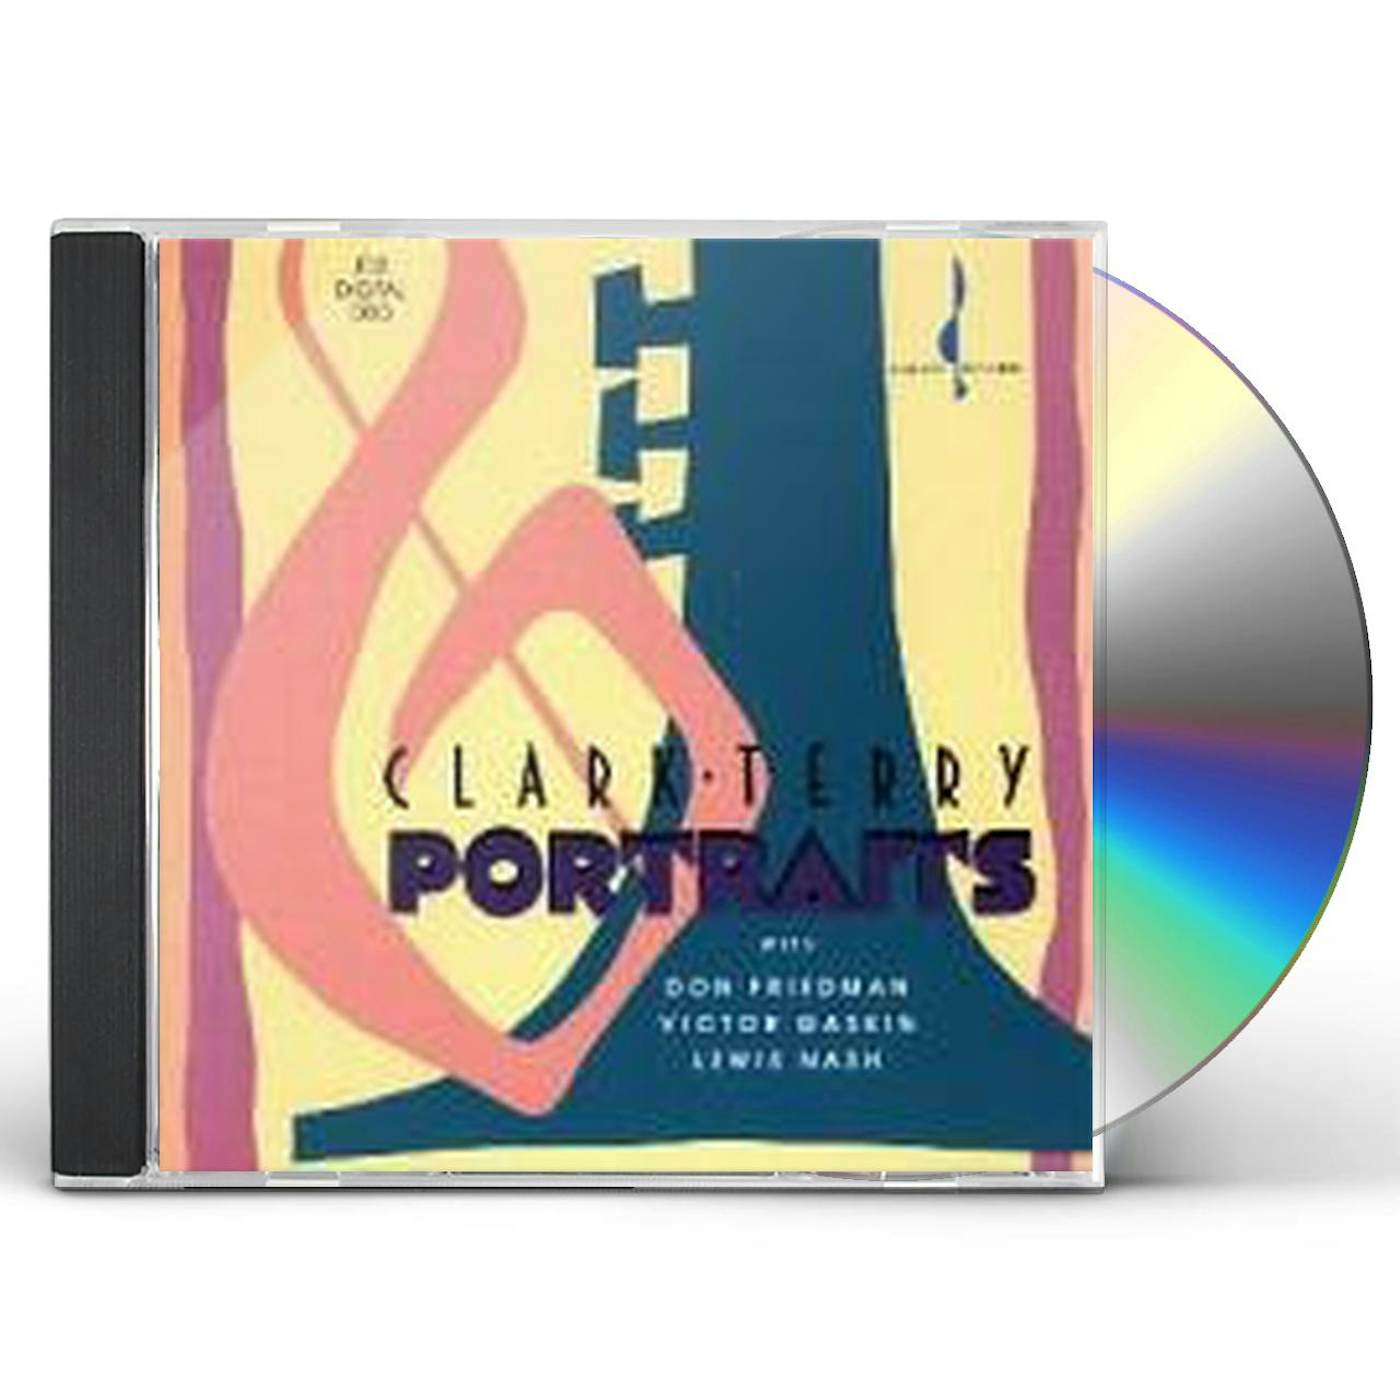 Clark Terry PORTRAITS CD